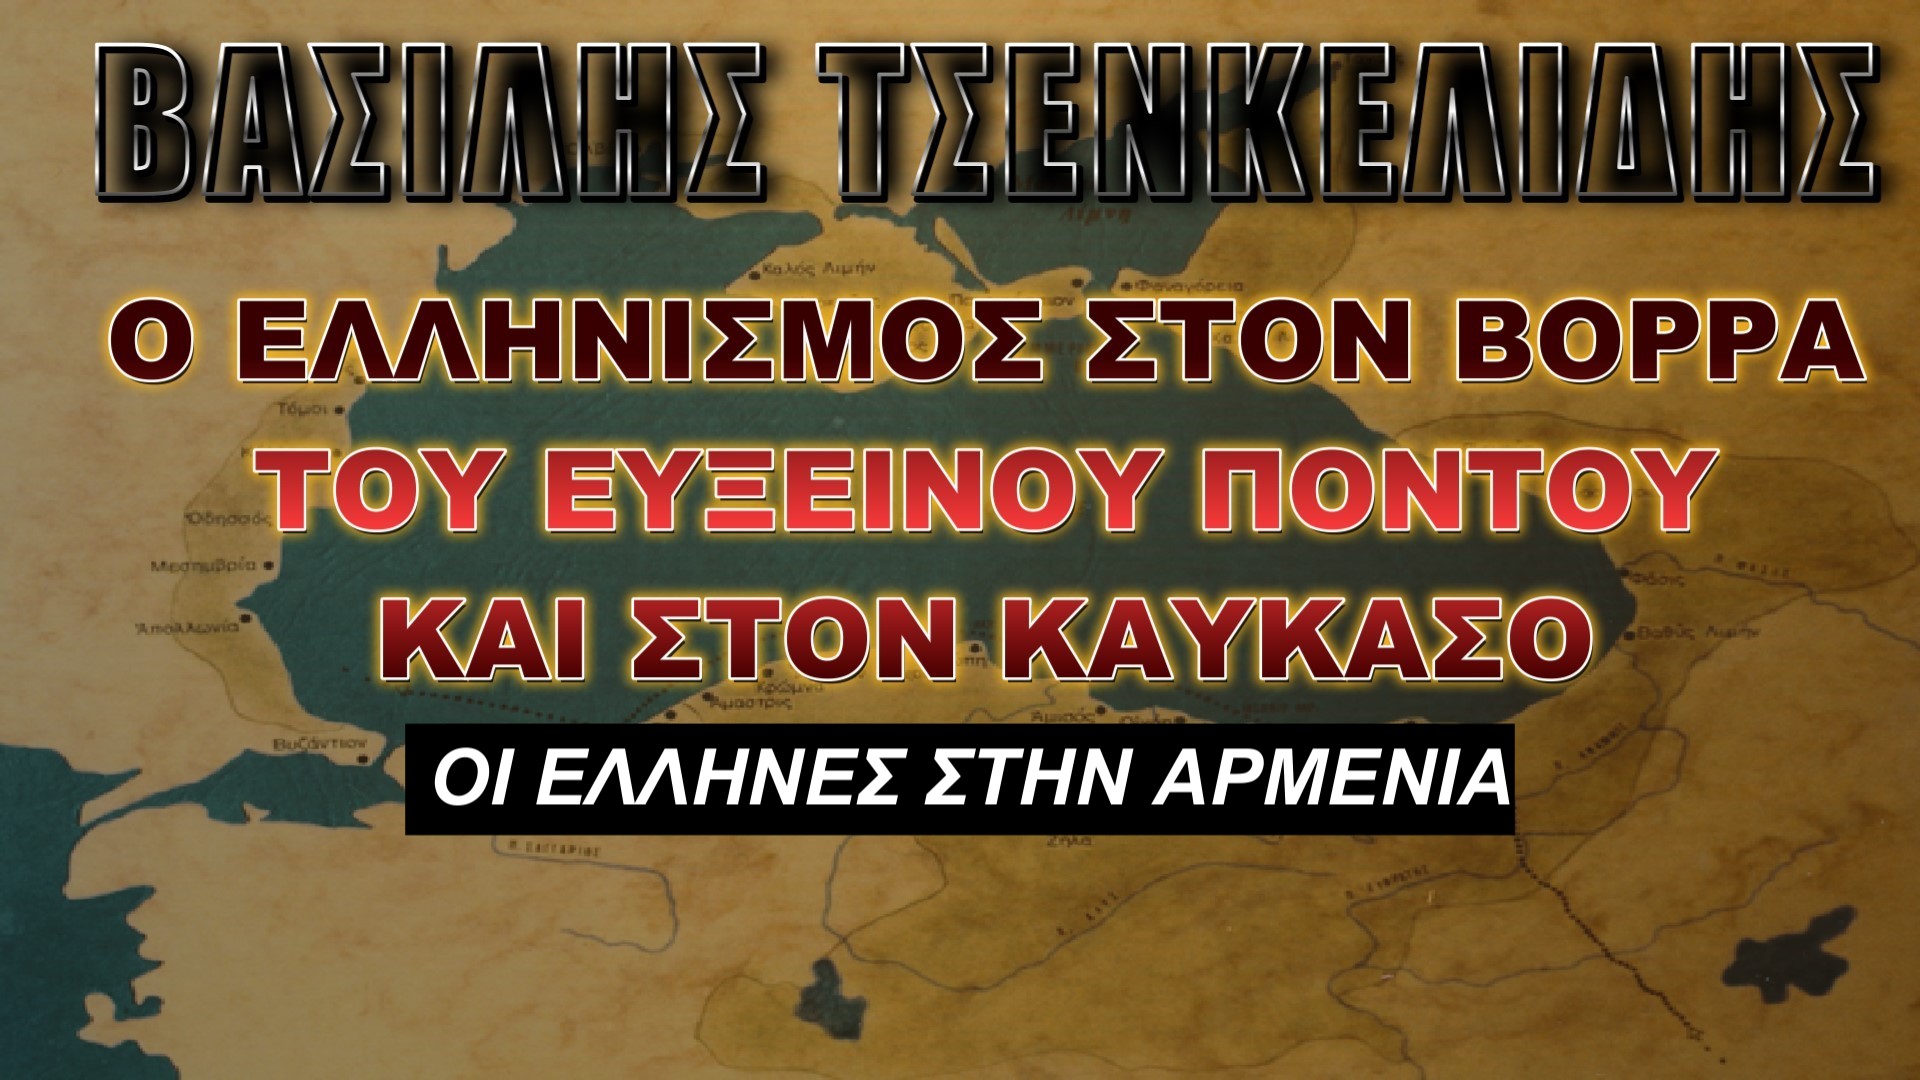 O Ελληνισμός στον Βορρά του Εύξεινου Πόντου και τον Καύκασο (Ζ’ ΜΕΡΟΣ)